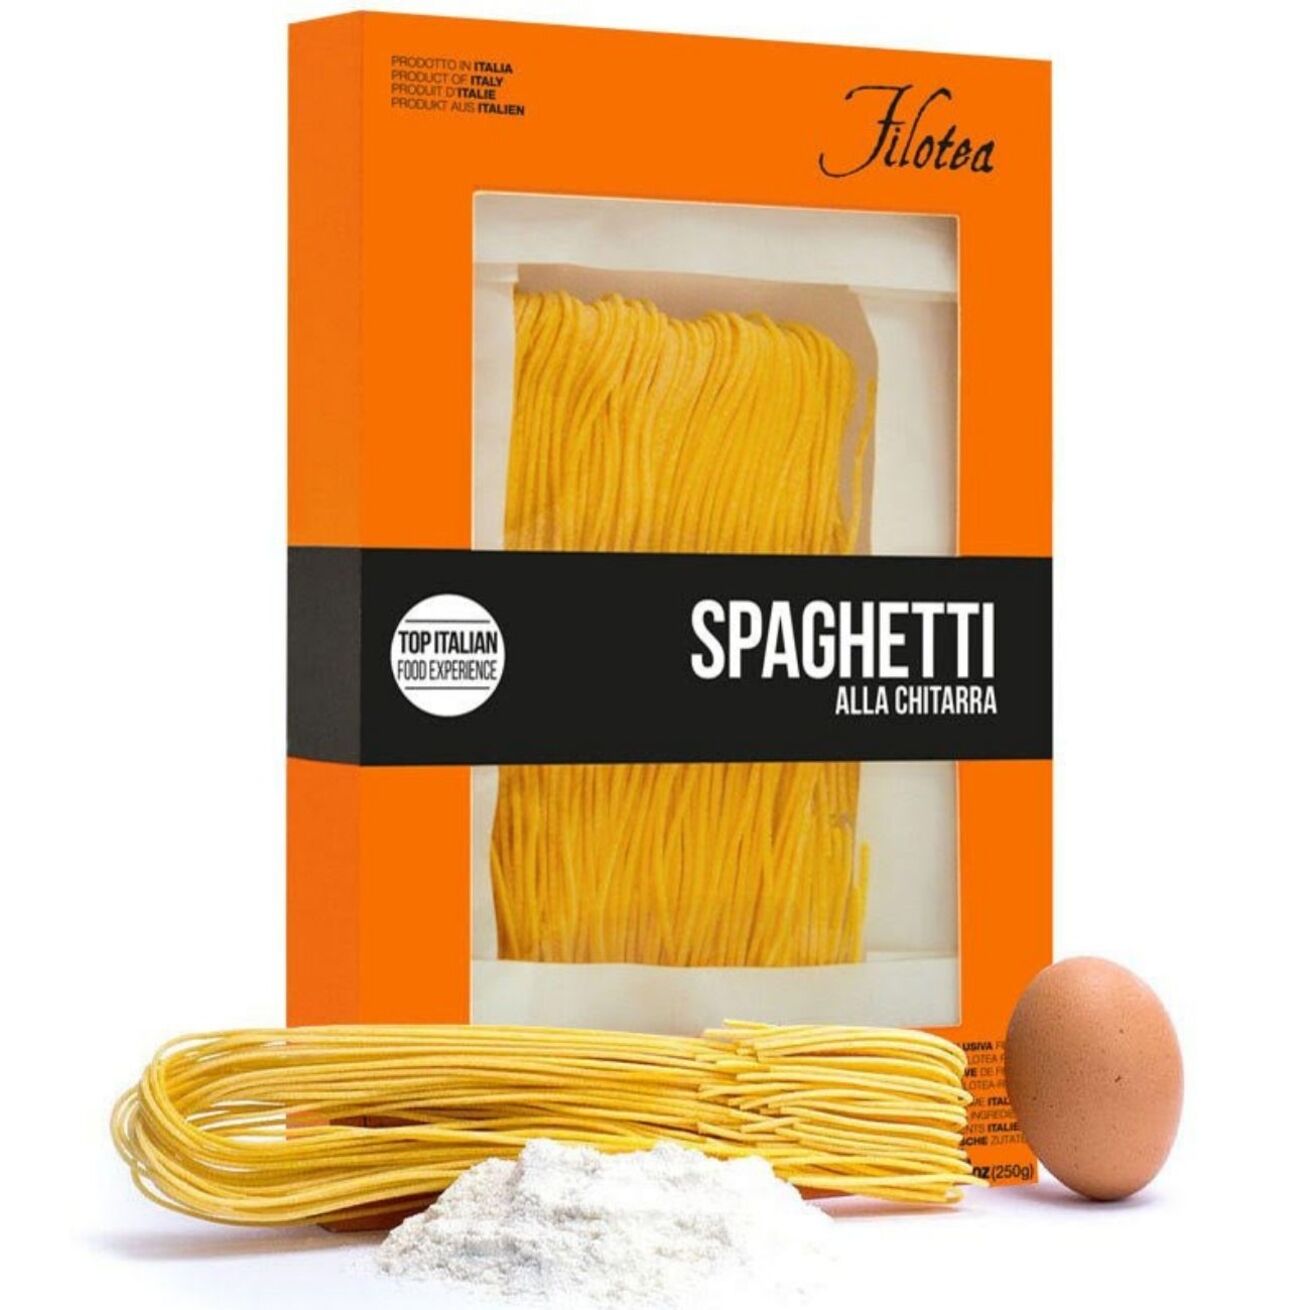 filotea_spaghetti_1300x1300 (1)